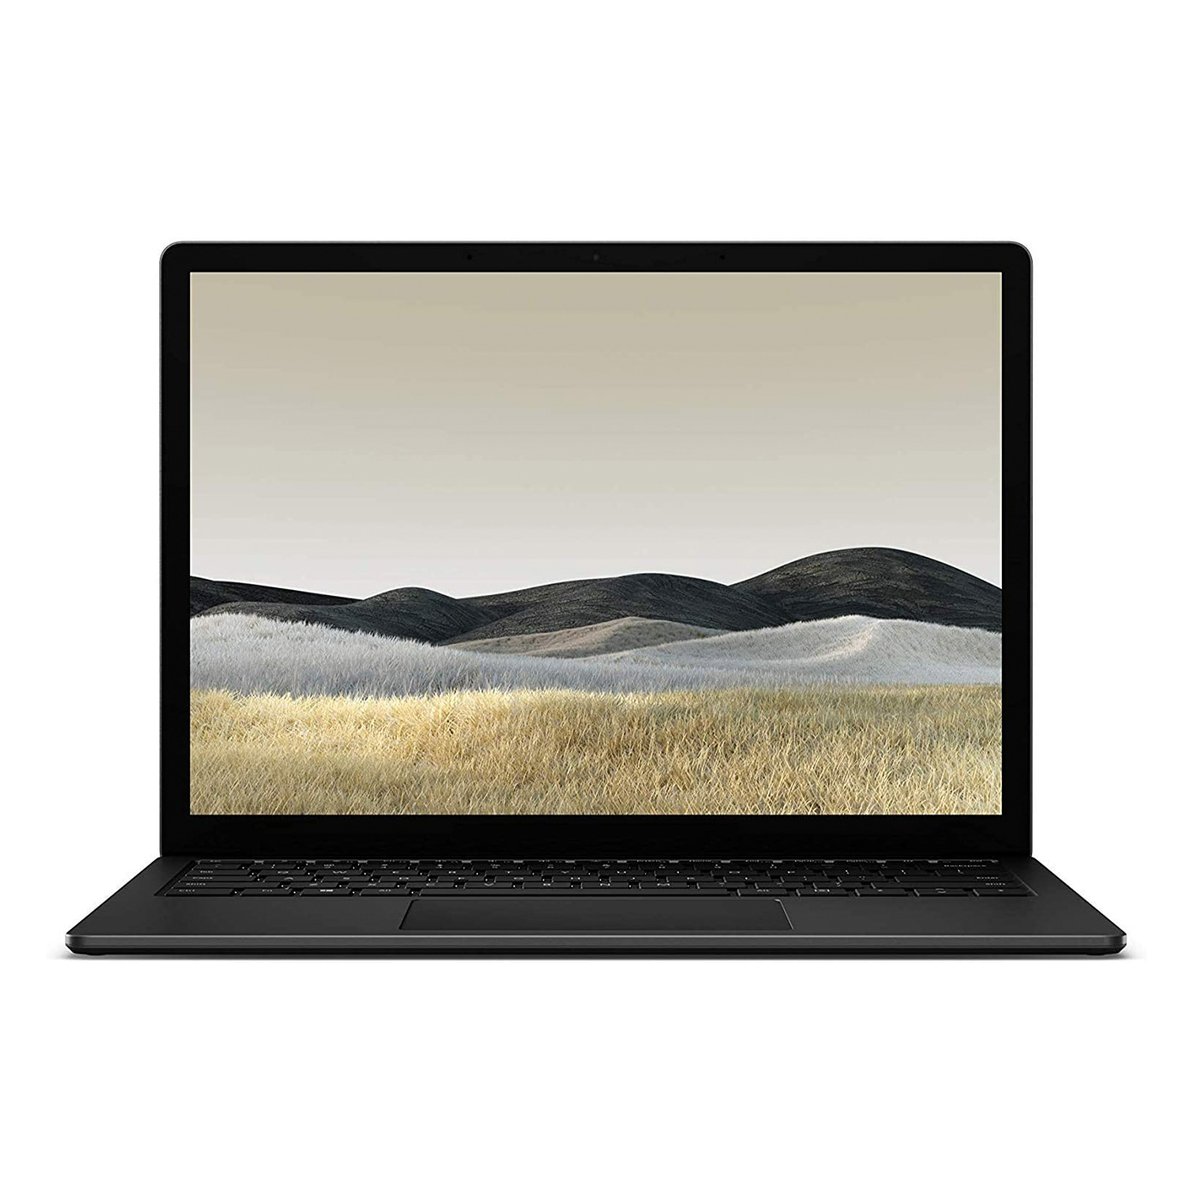 Microsoft Surface Laptop 3 [V4C-00034] Touchscreen Laptop, Intel Core i5-1035G7, 13.5 Inch, 256GB, 8GB RAM, Intel Iris Plus Graphics, Winndows10, Black